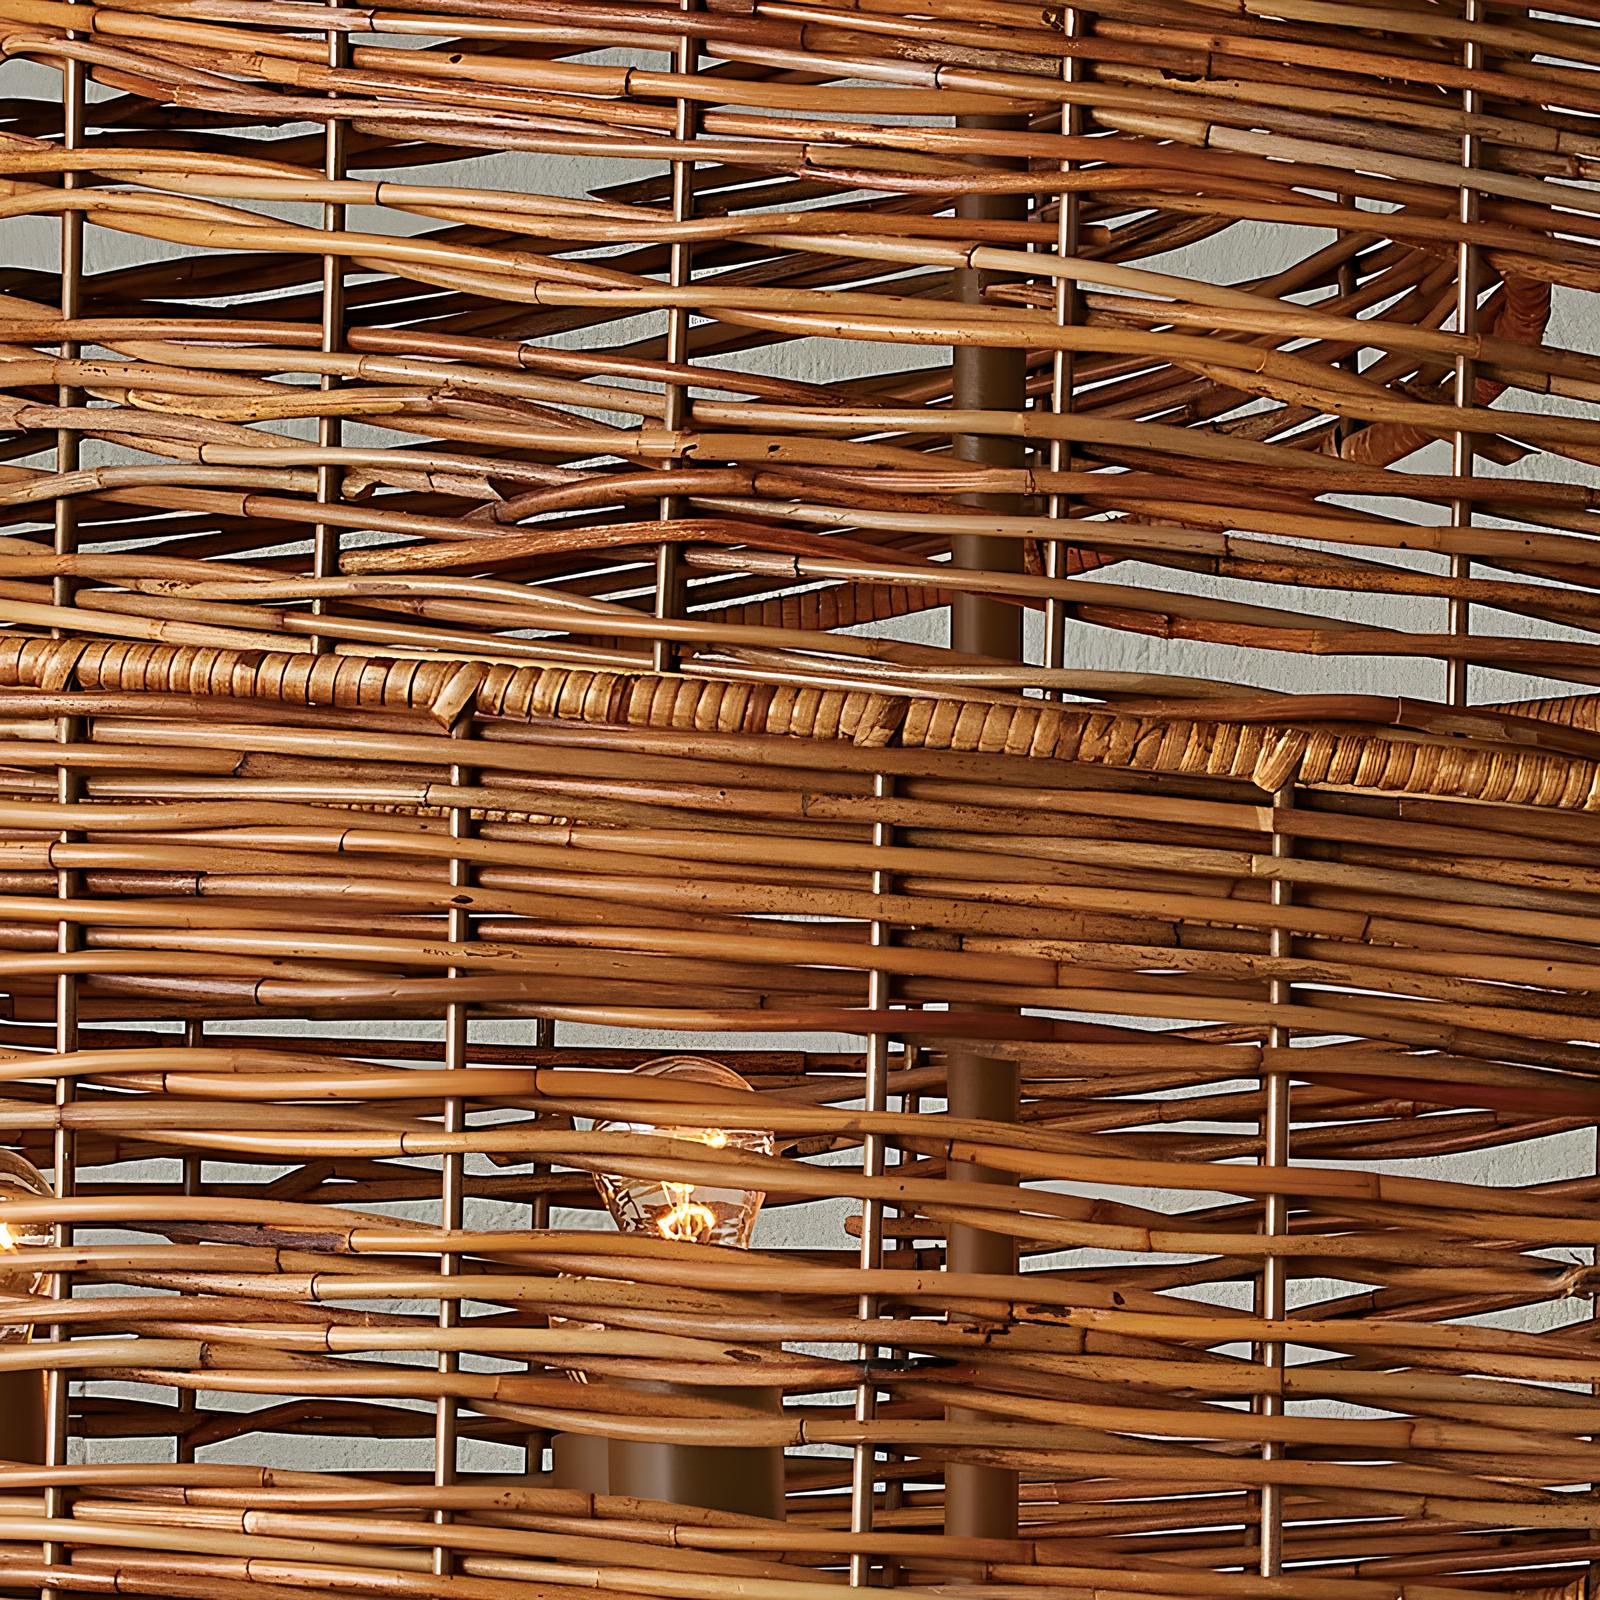 Bamboo Hanging lamp for Living Room | Rattan Pendant light | Cane ceiling light - Anaka - Akway